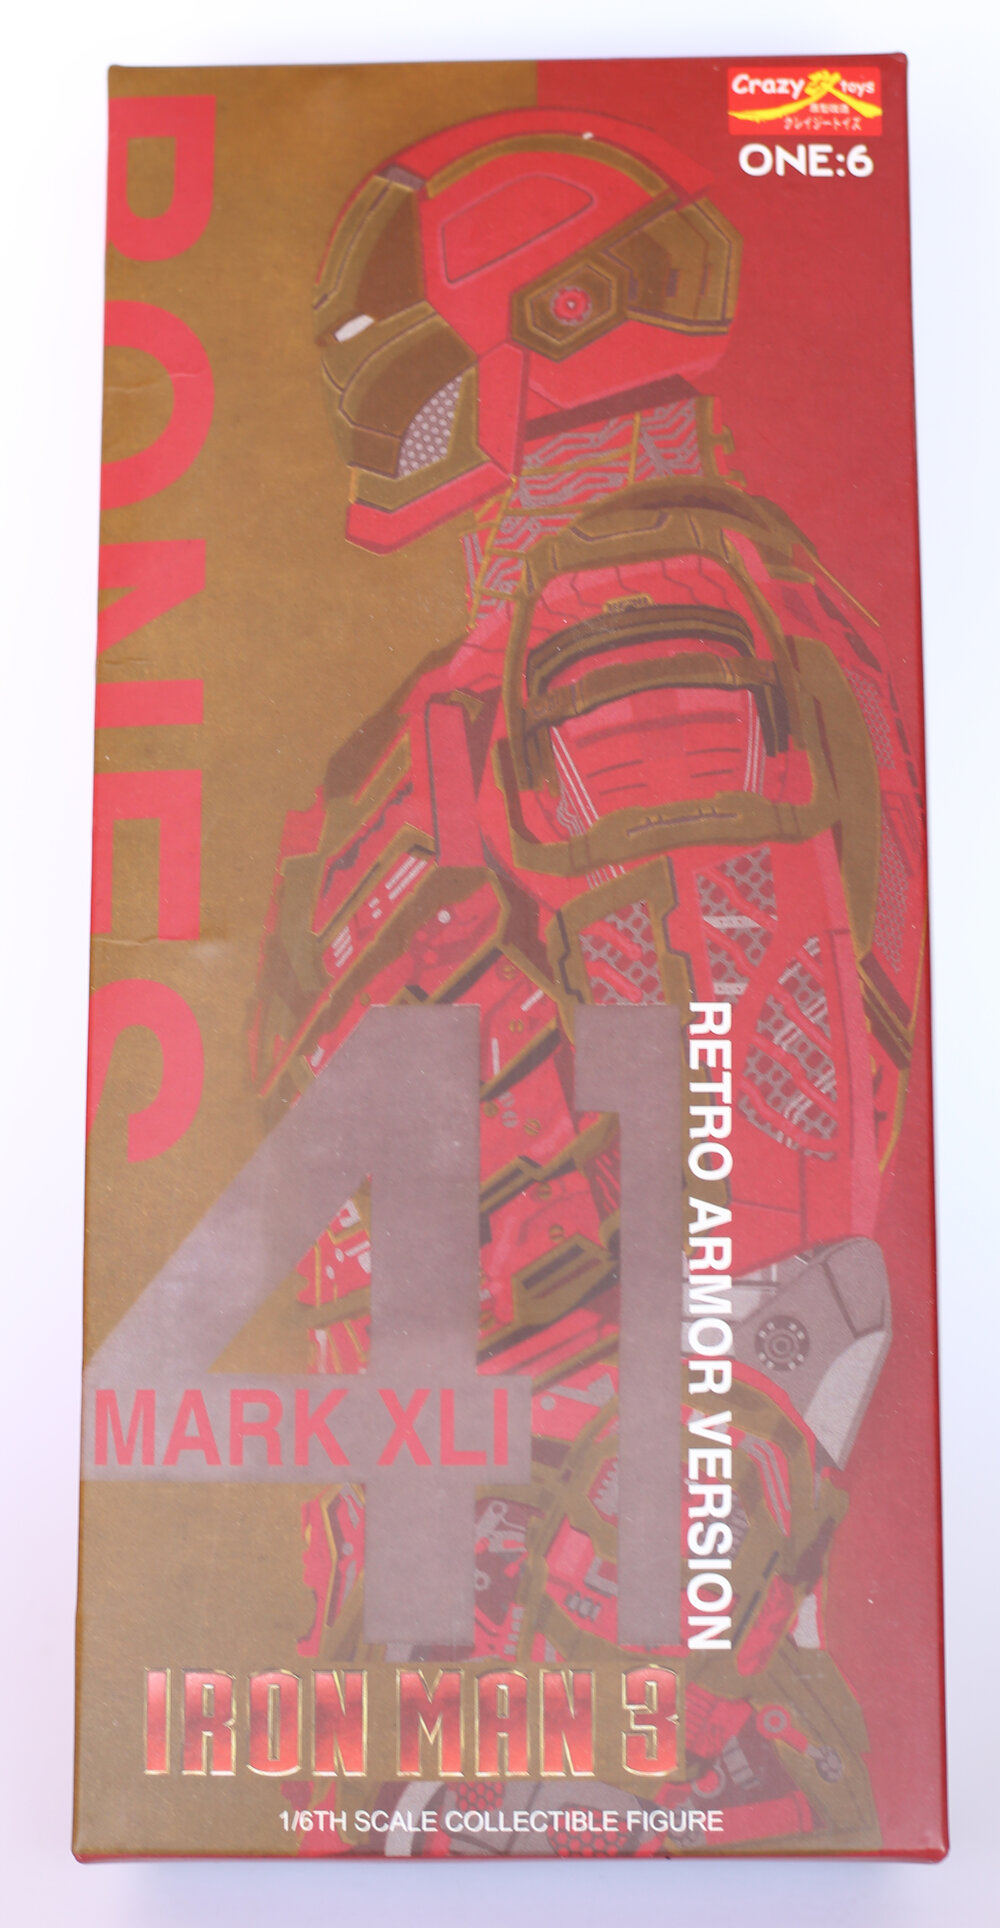 Crazy Toys Iron Man Bones Mark 41 Retro Version front of box